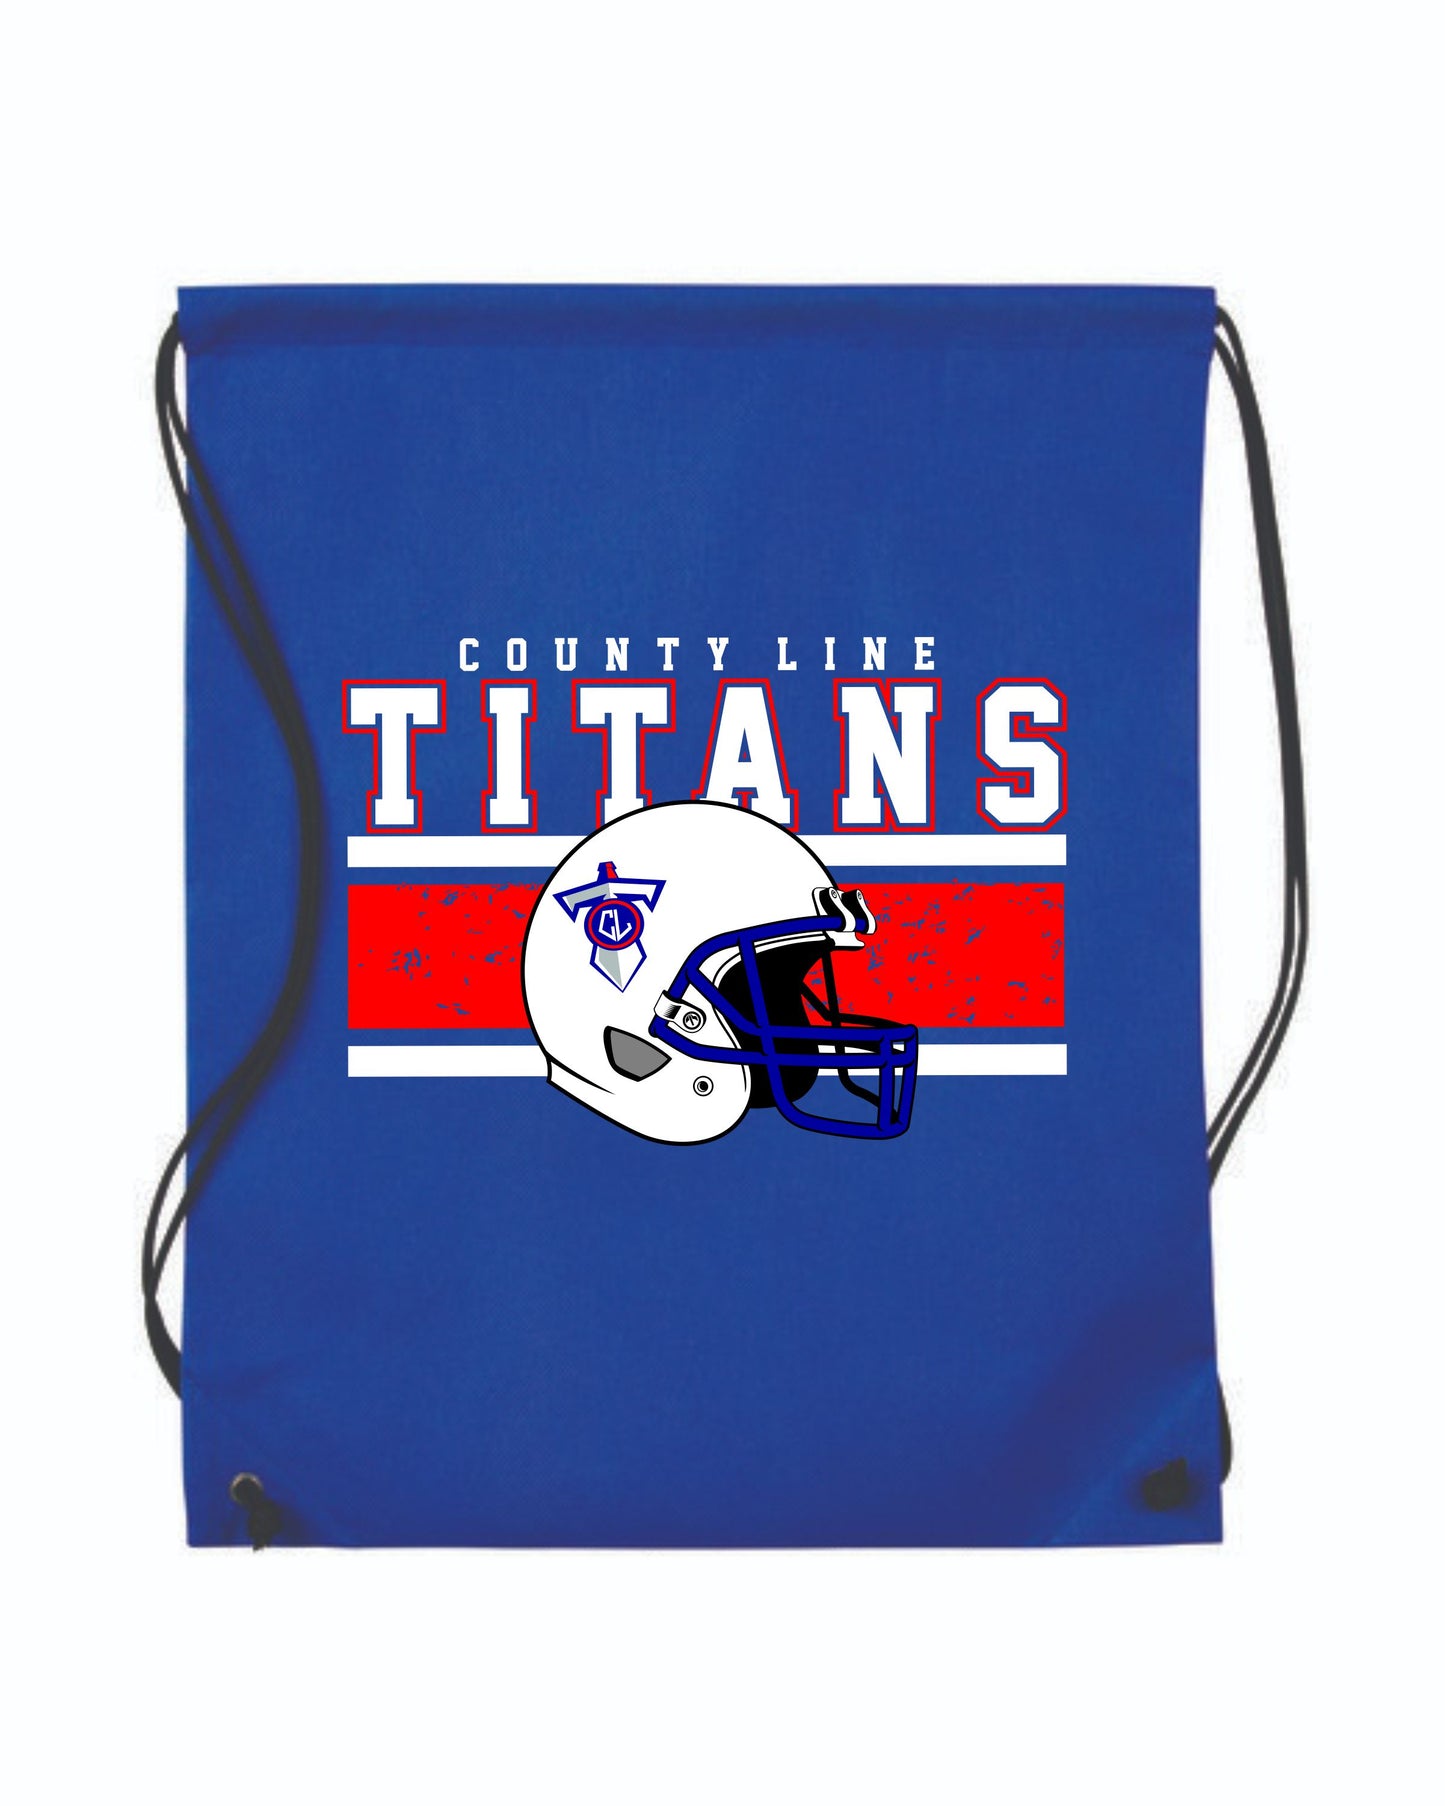 Titans County Line Drawstrings Bag